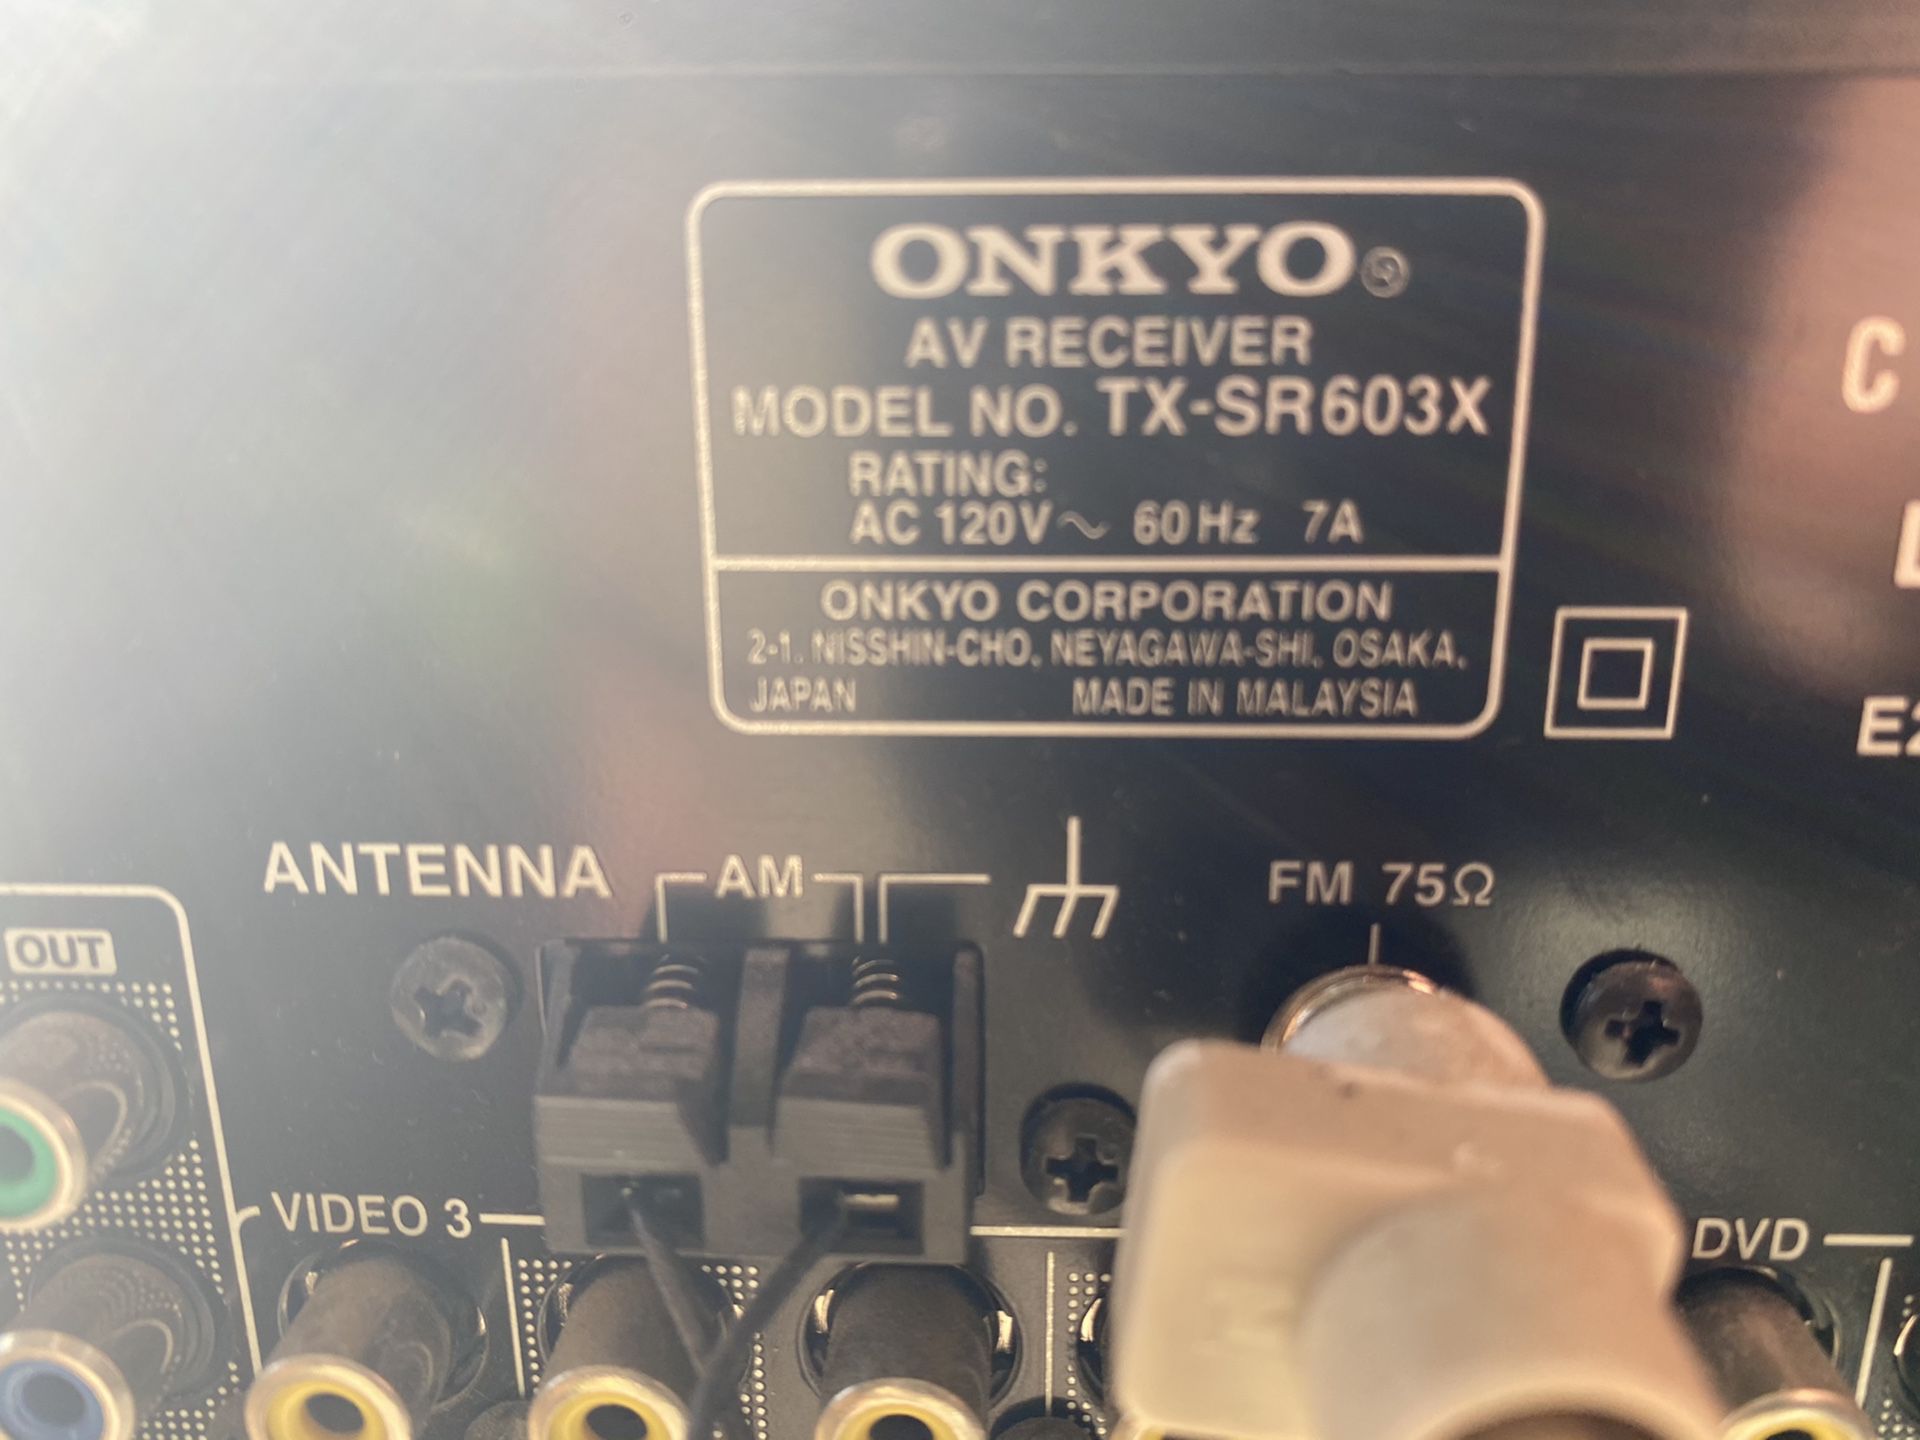 Onkyo receiver